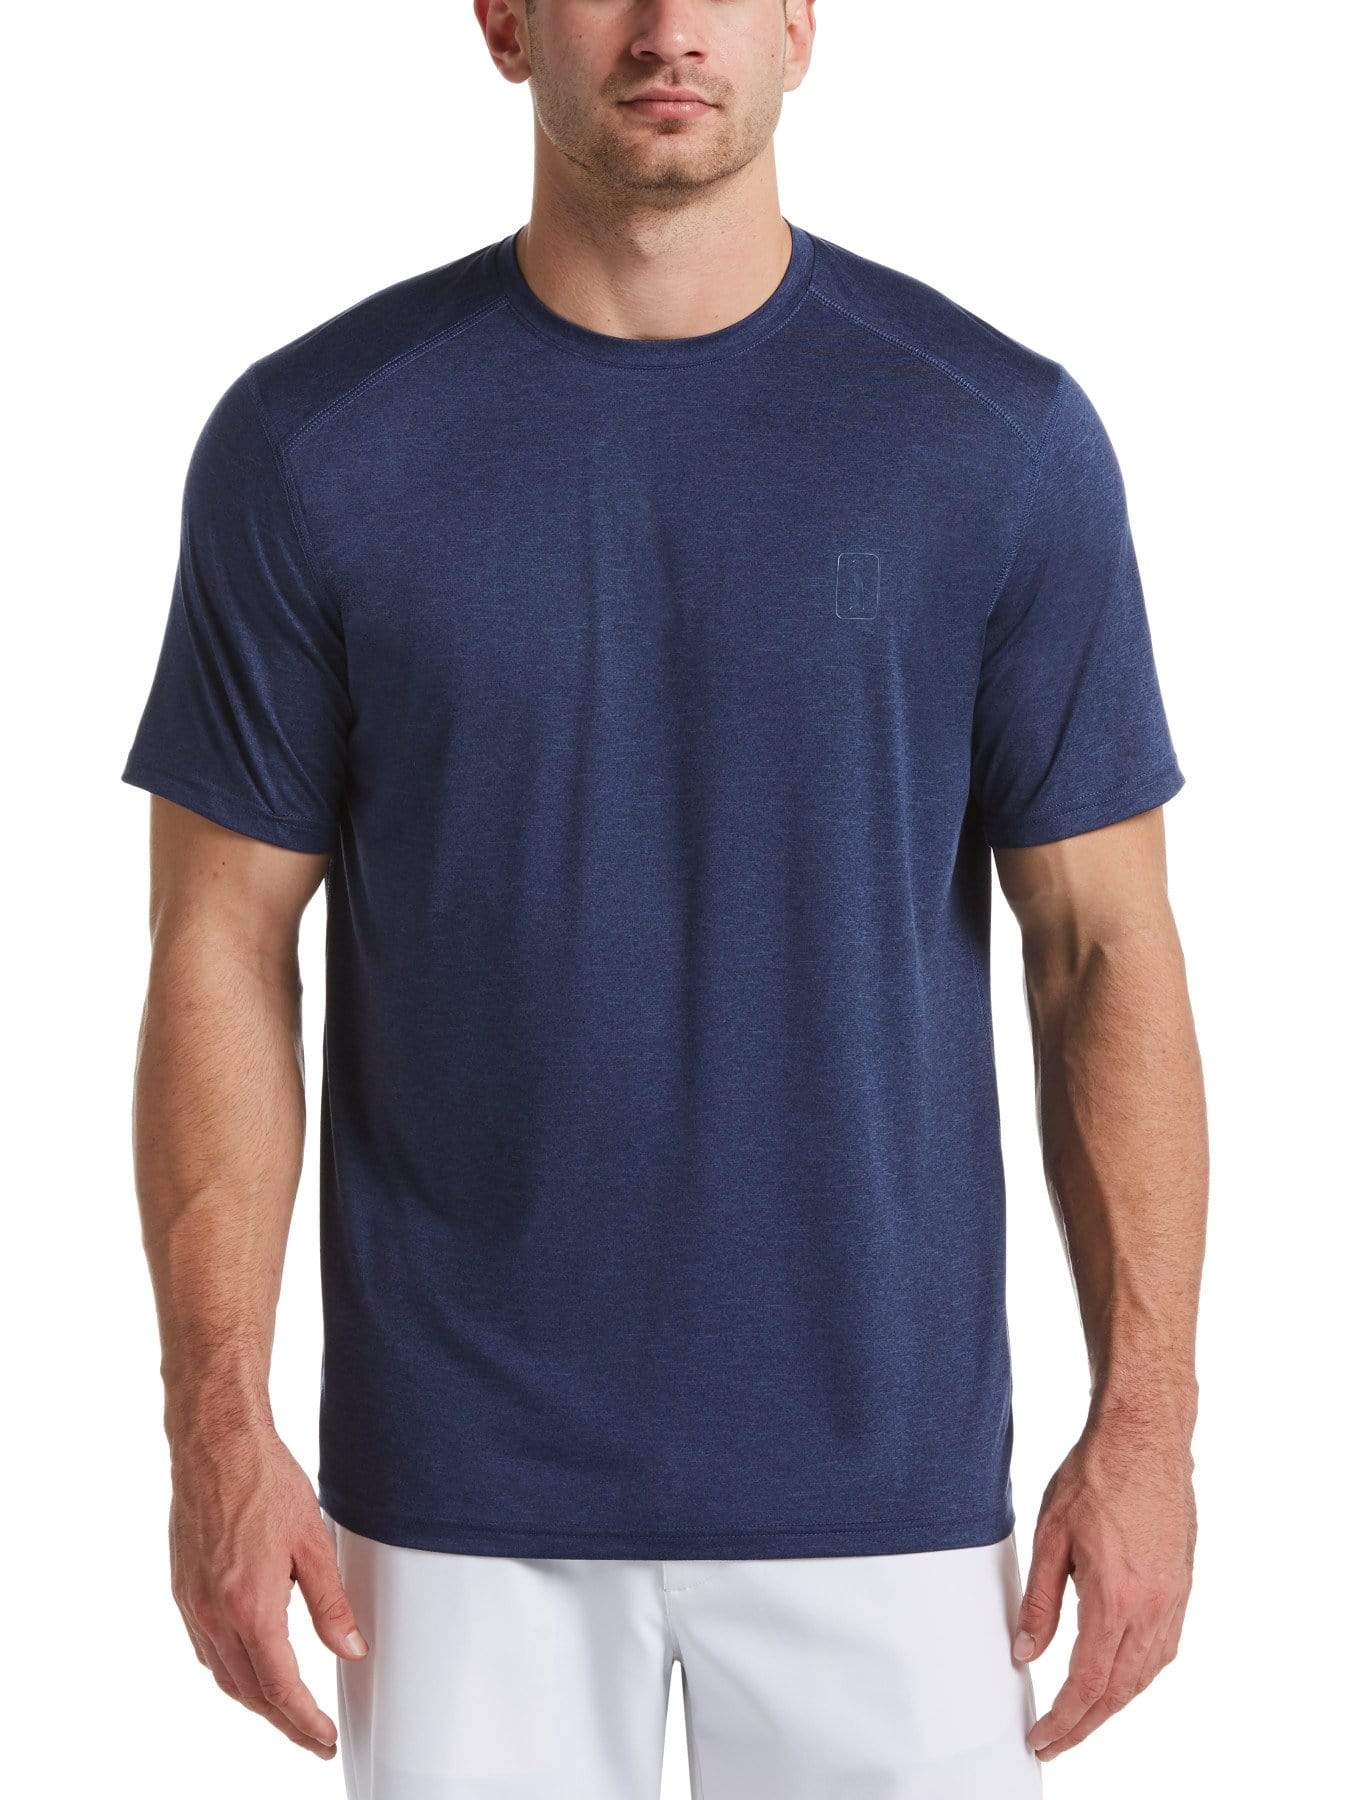 PGA TOUR Apparel Mens Crew Neck T-Shirt, Size Medium, Peacoat Heather Blue, Polyester/Elastane | Golf Apparel Shop